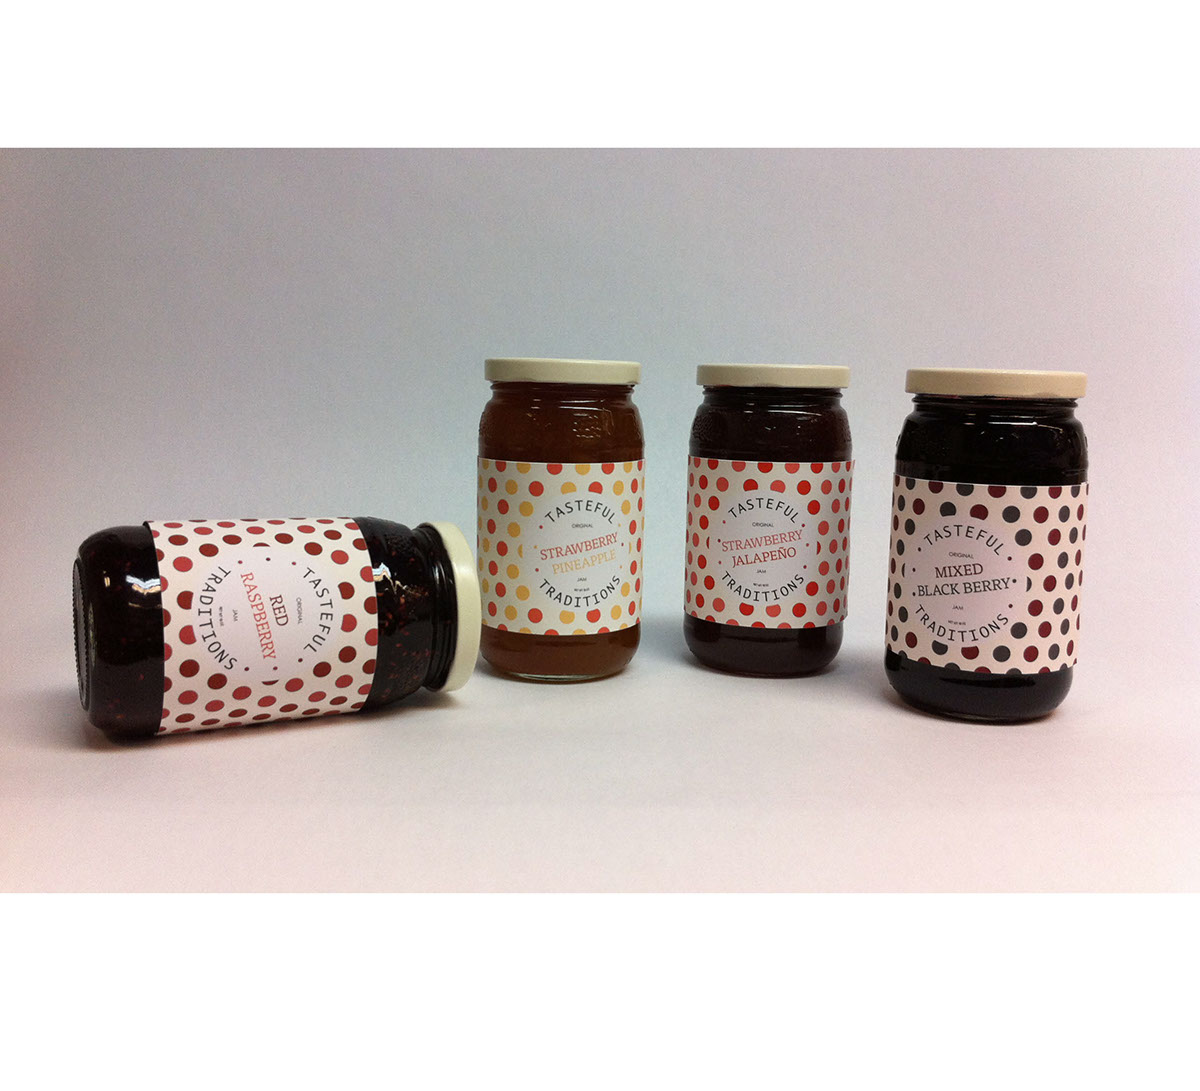 Jam Designs jam lables labels jars colors Food  preserves